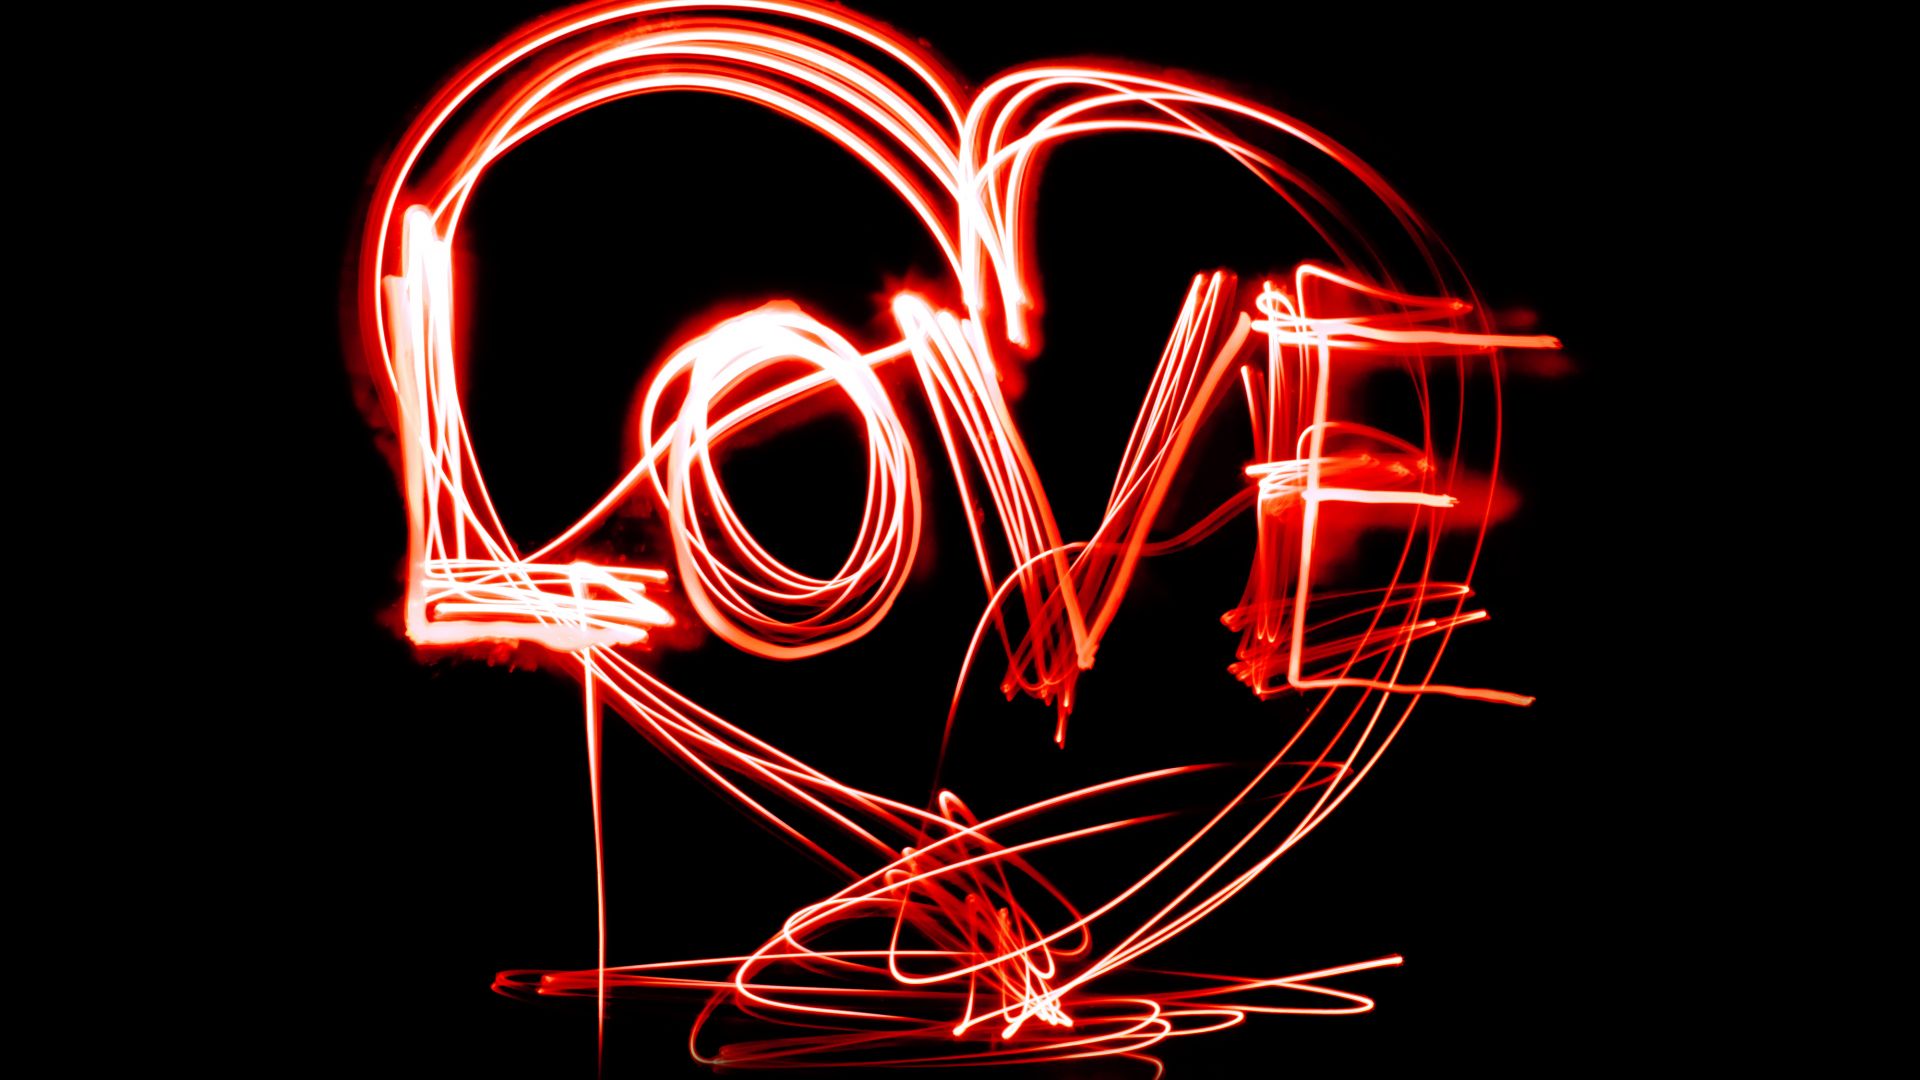 фото любовь, сердце, love image, heart, 4k (horizontal)